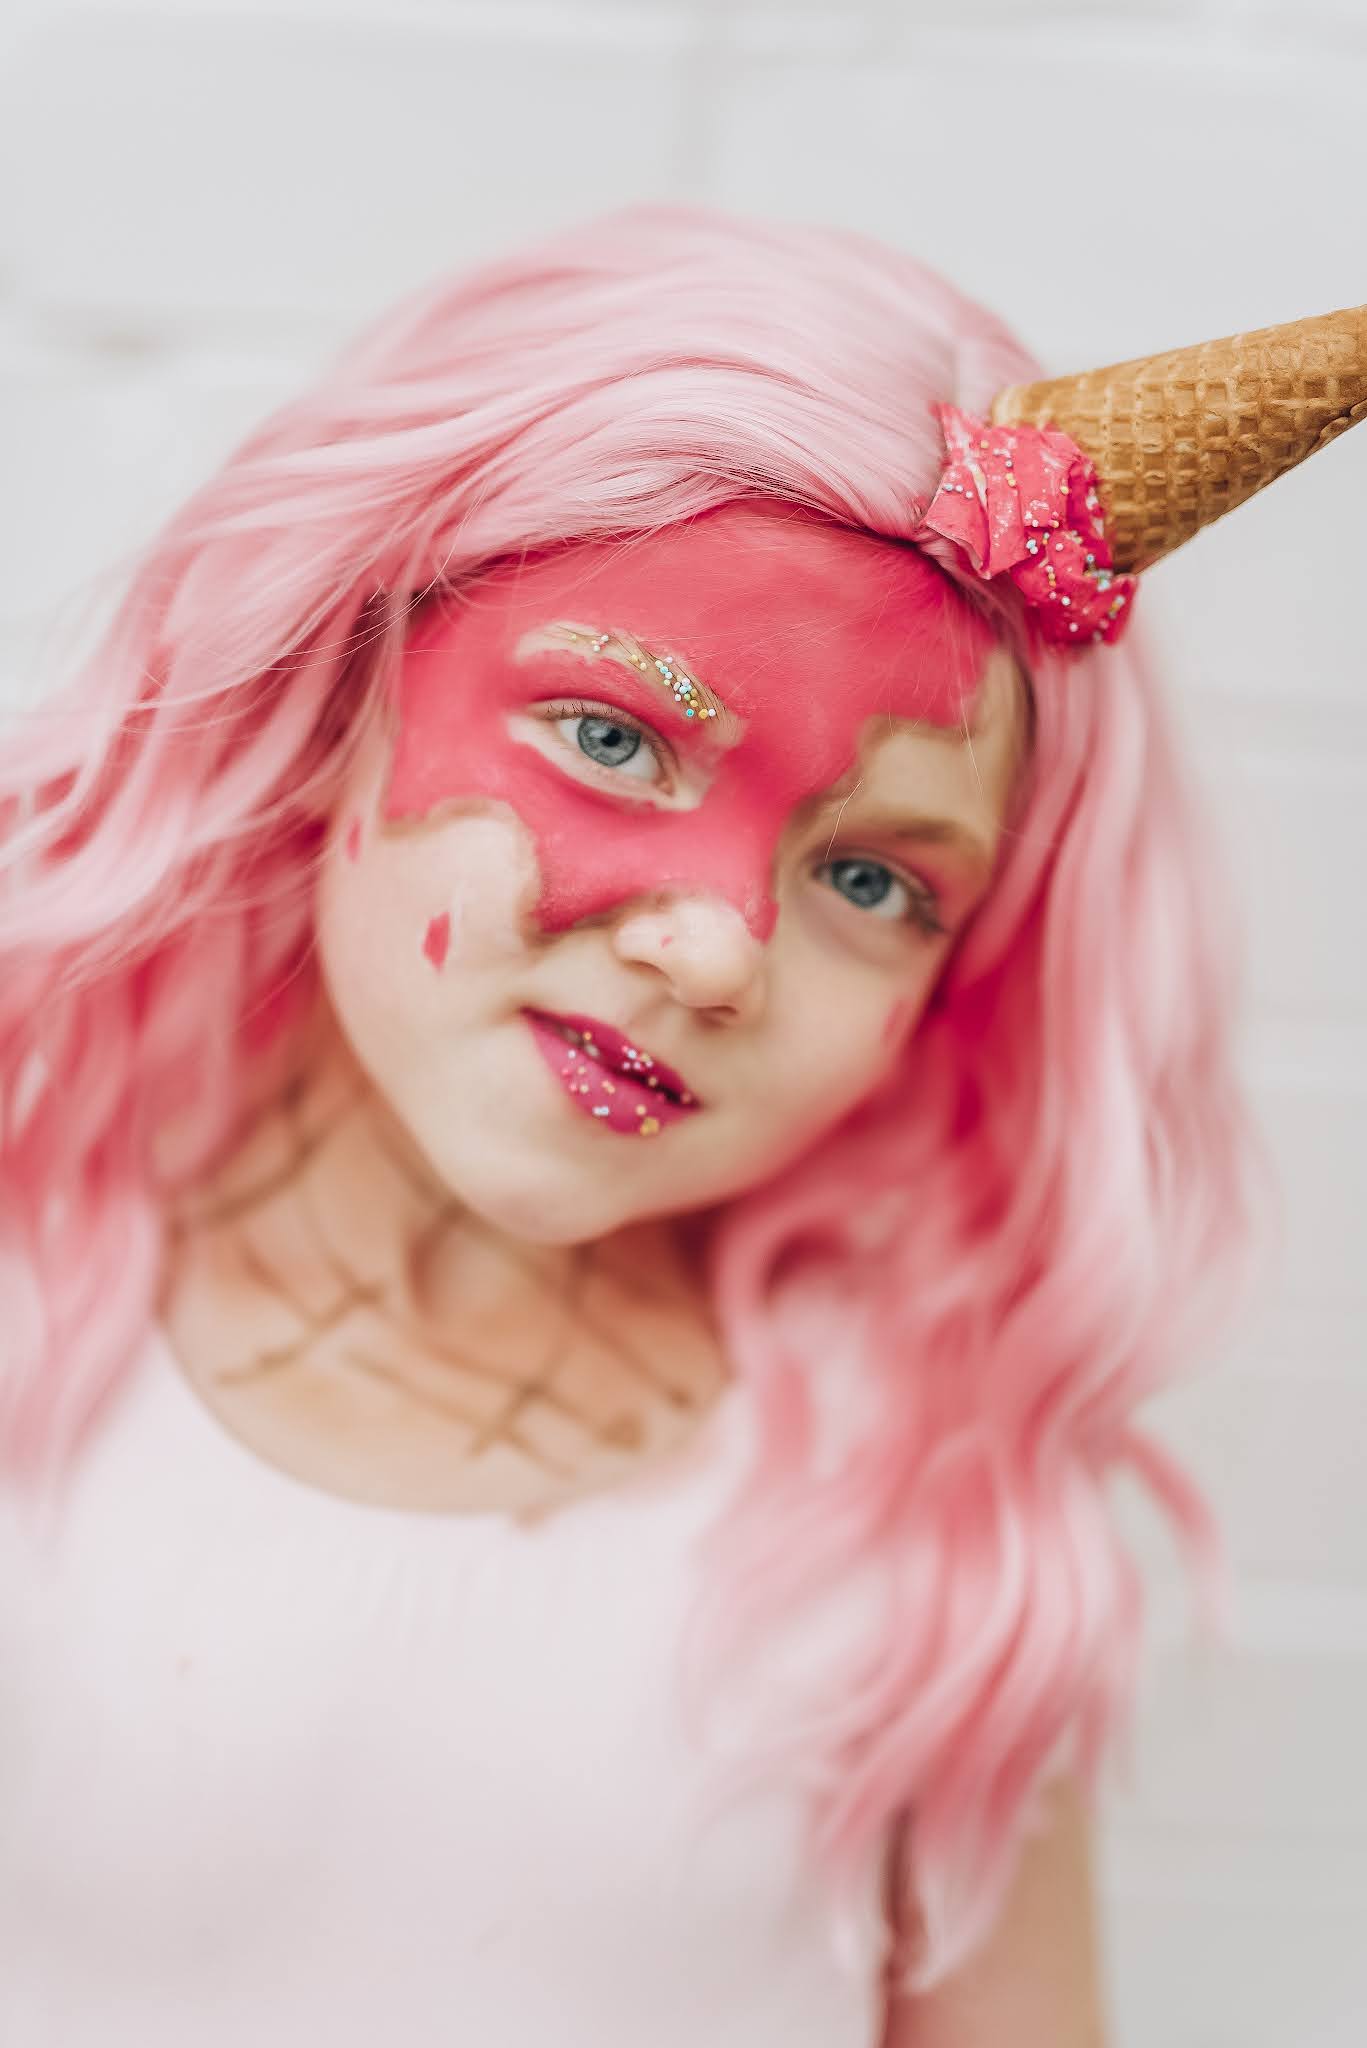 Melted Ice Cream Cone Halloween Costume & Makeup - Something Delightful Blog #HalloweenCostueme #CostumeDIY #MommyandMeCostume